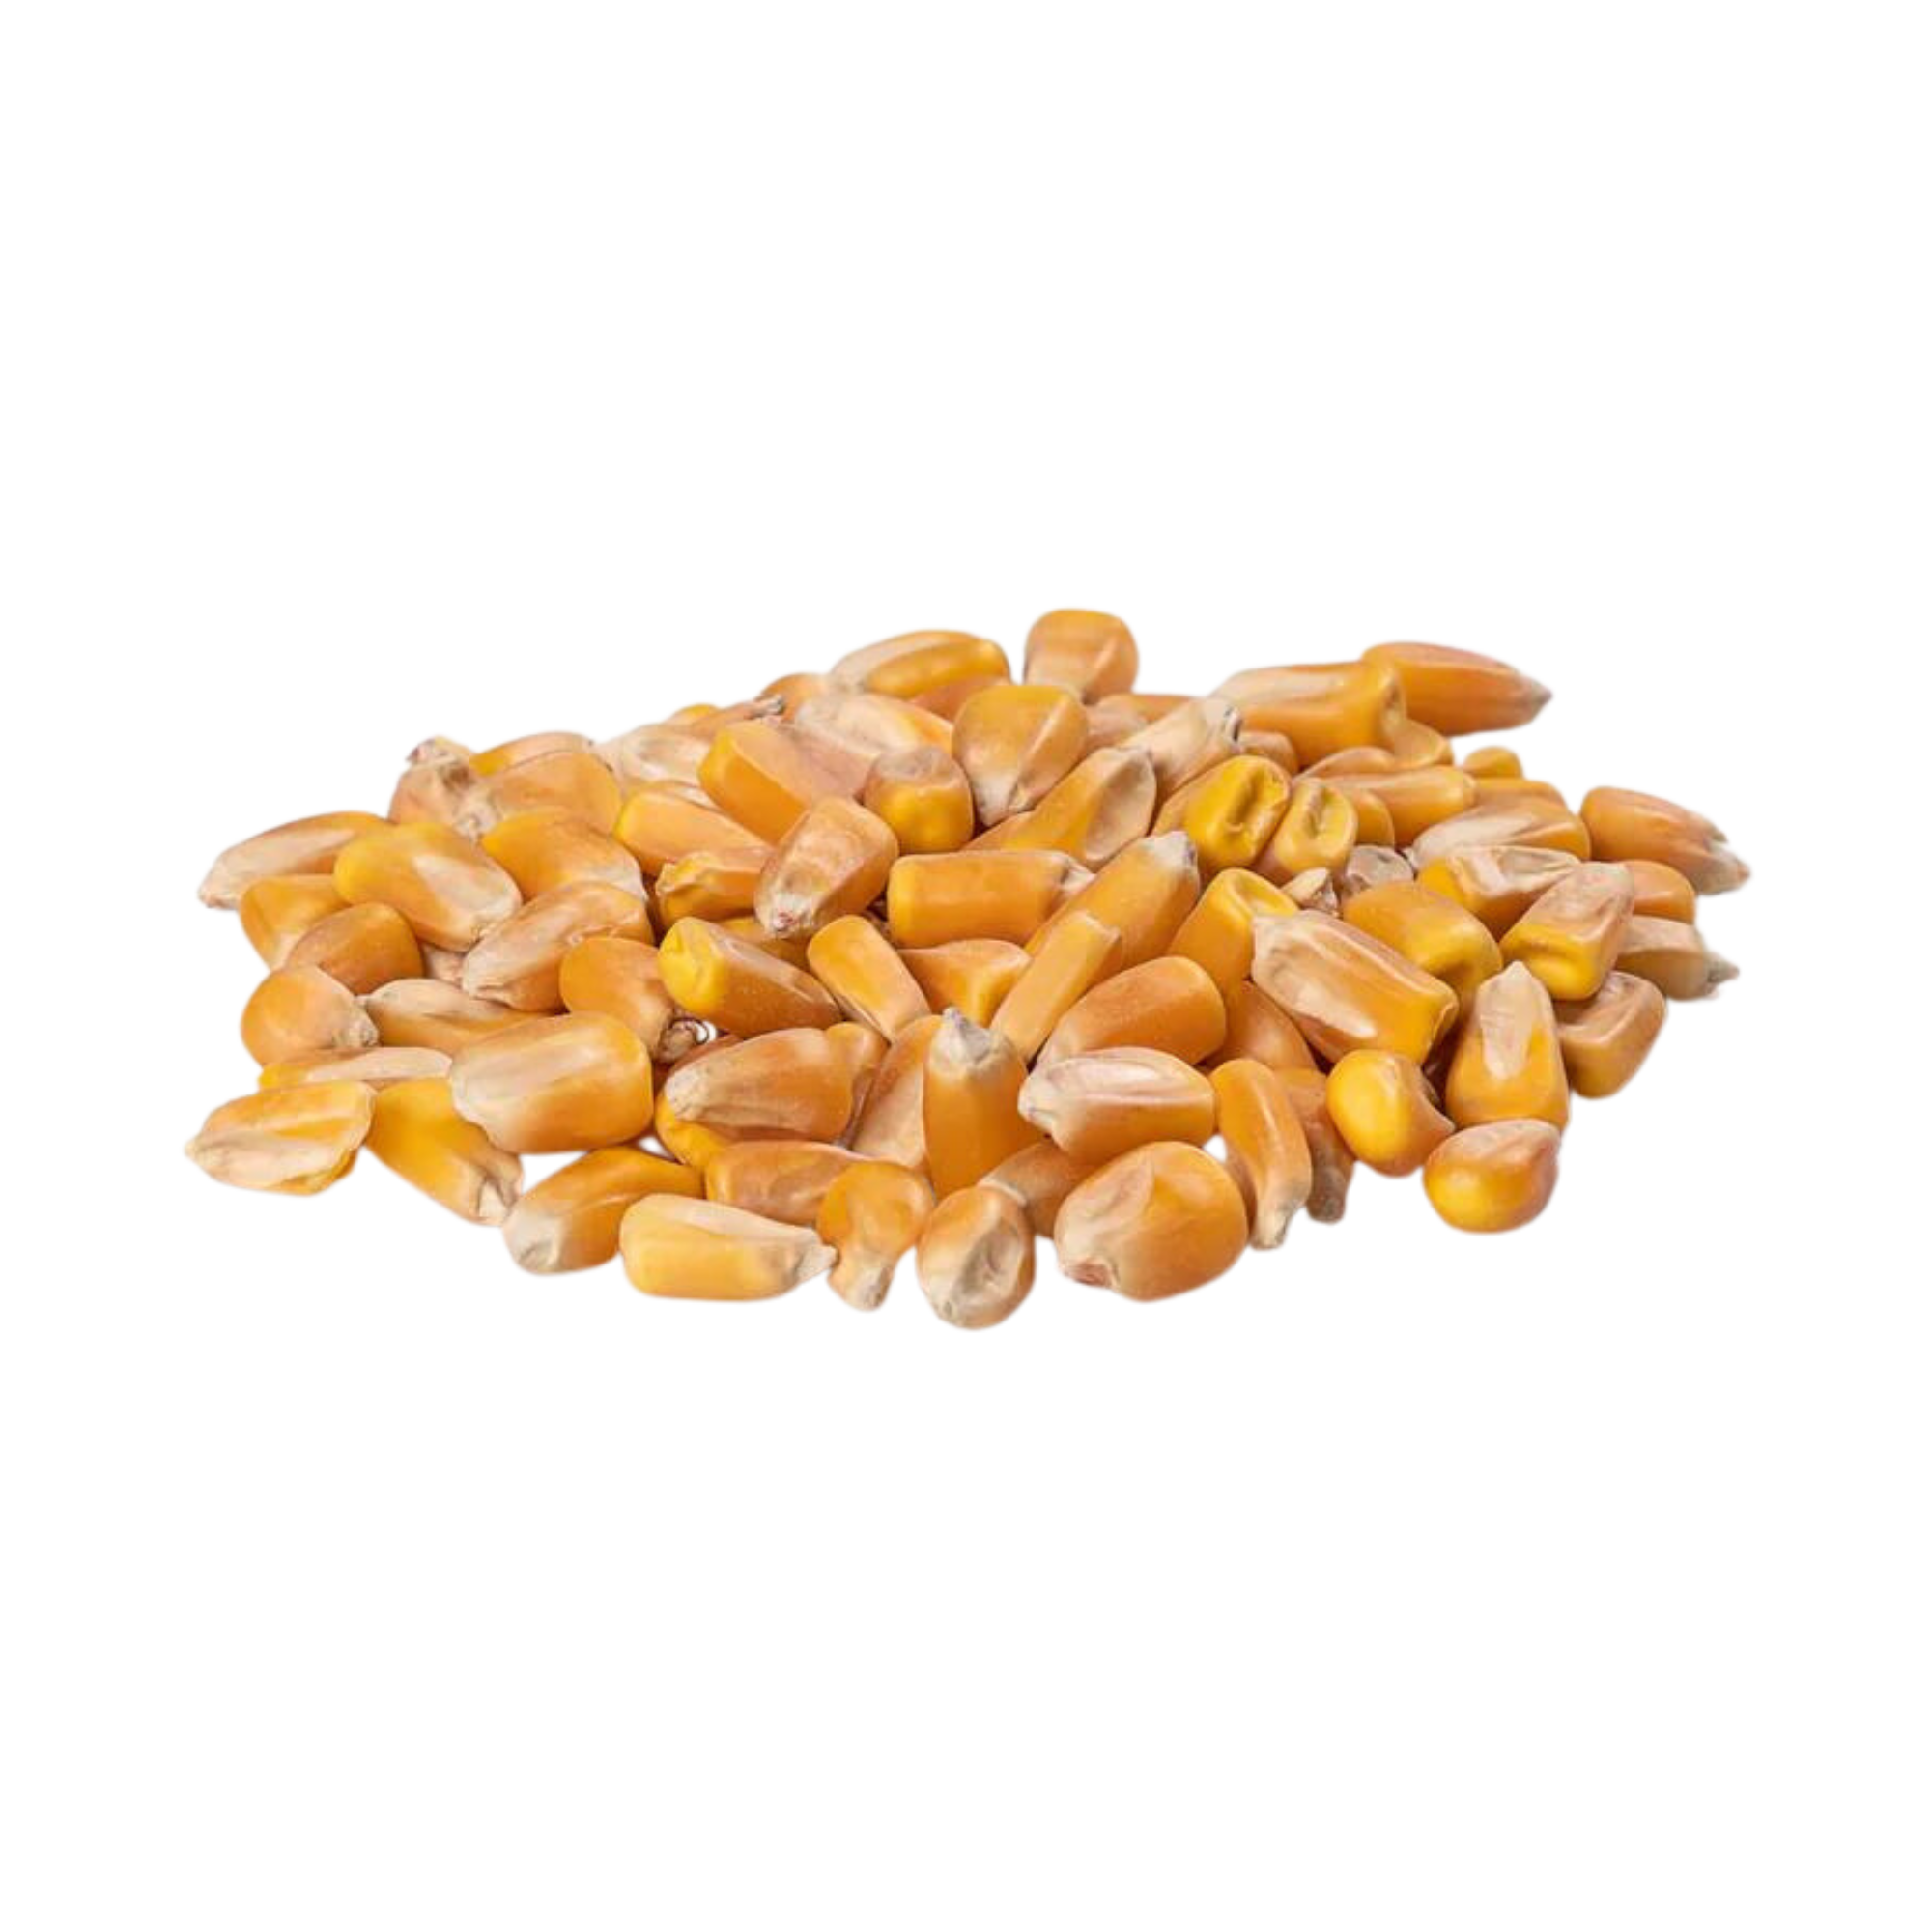 YM1 Maize or Corn MOQ: 105 Metric Tons